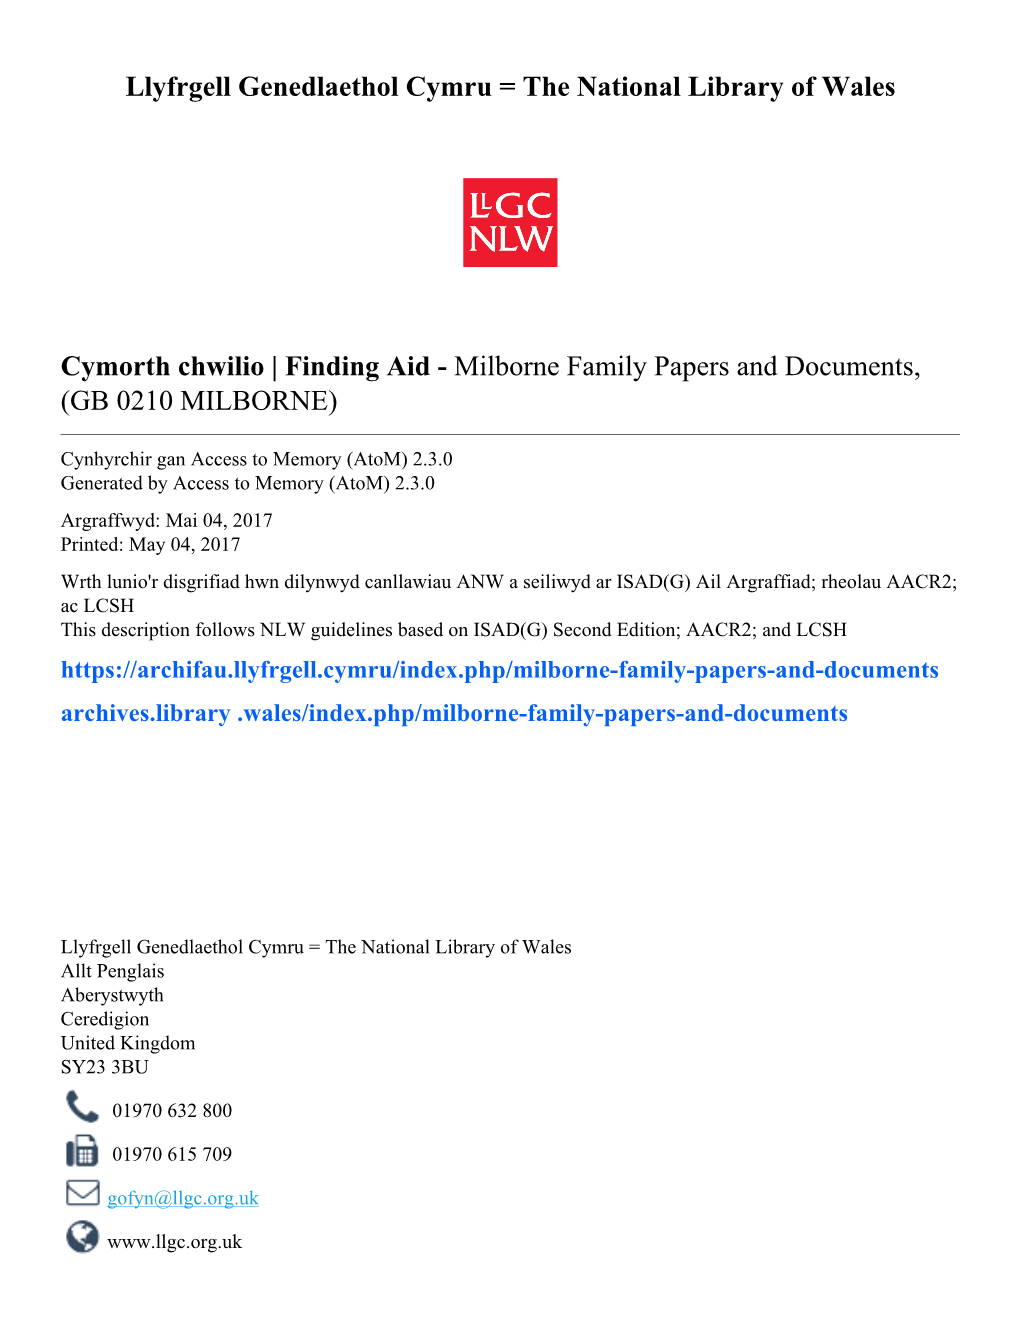 Milborne Family Papers and Documents, (GB 0210 MILBORNE)